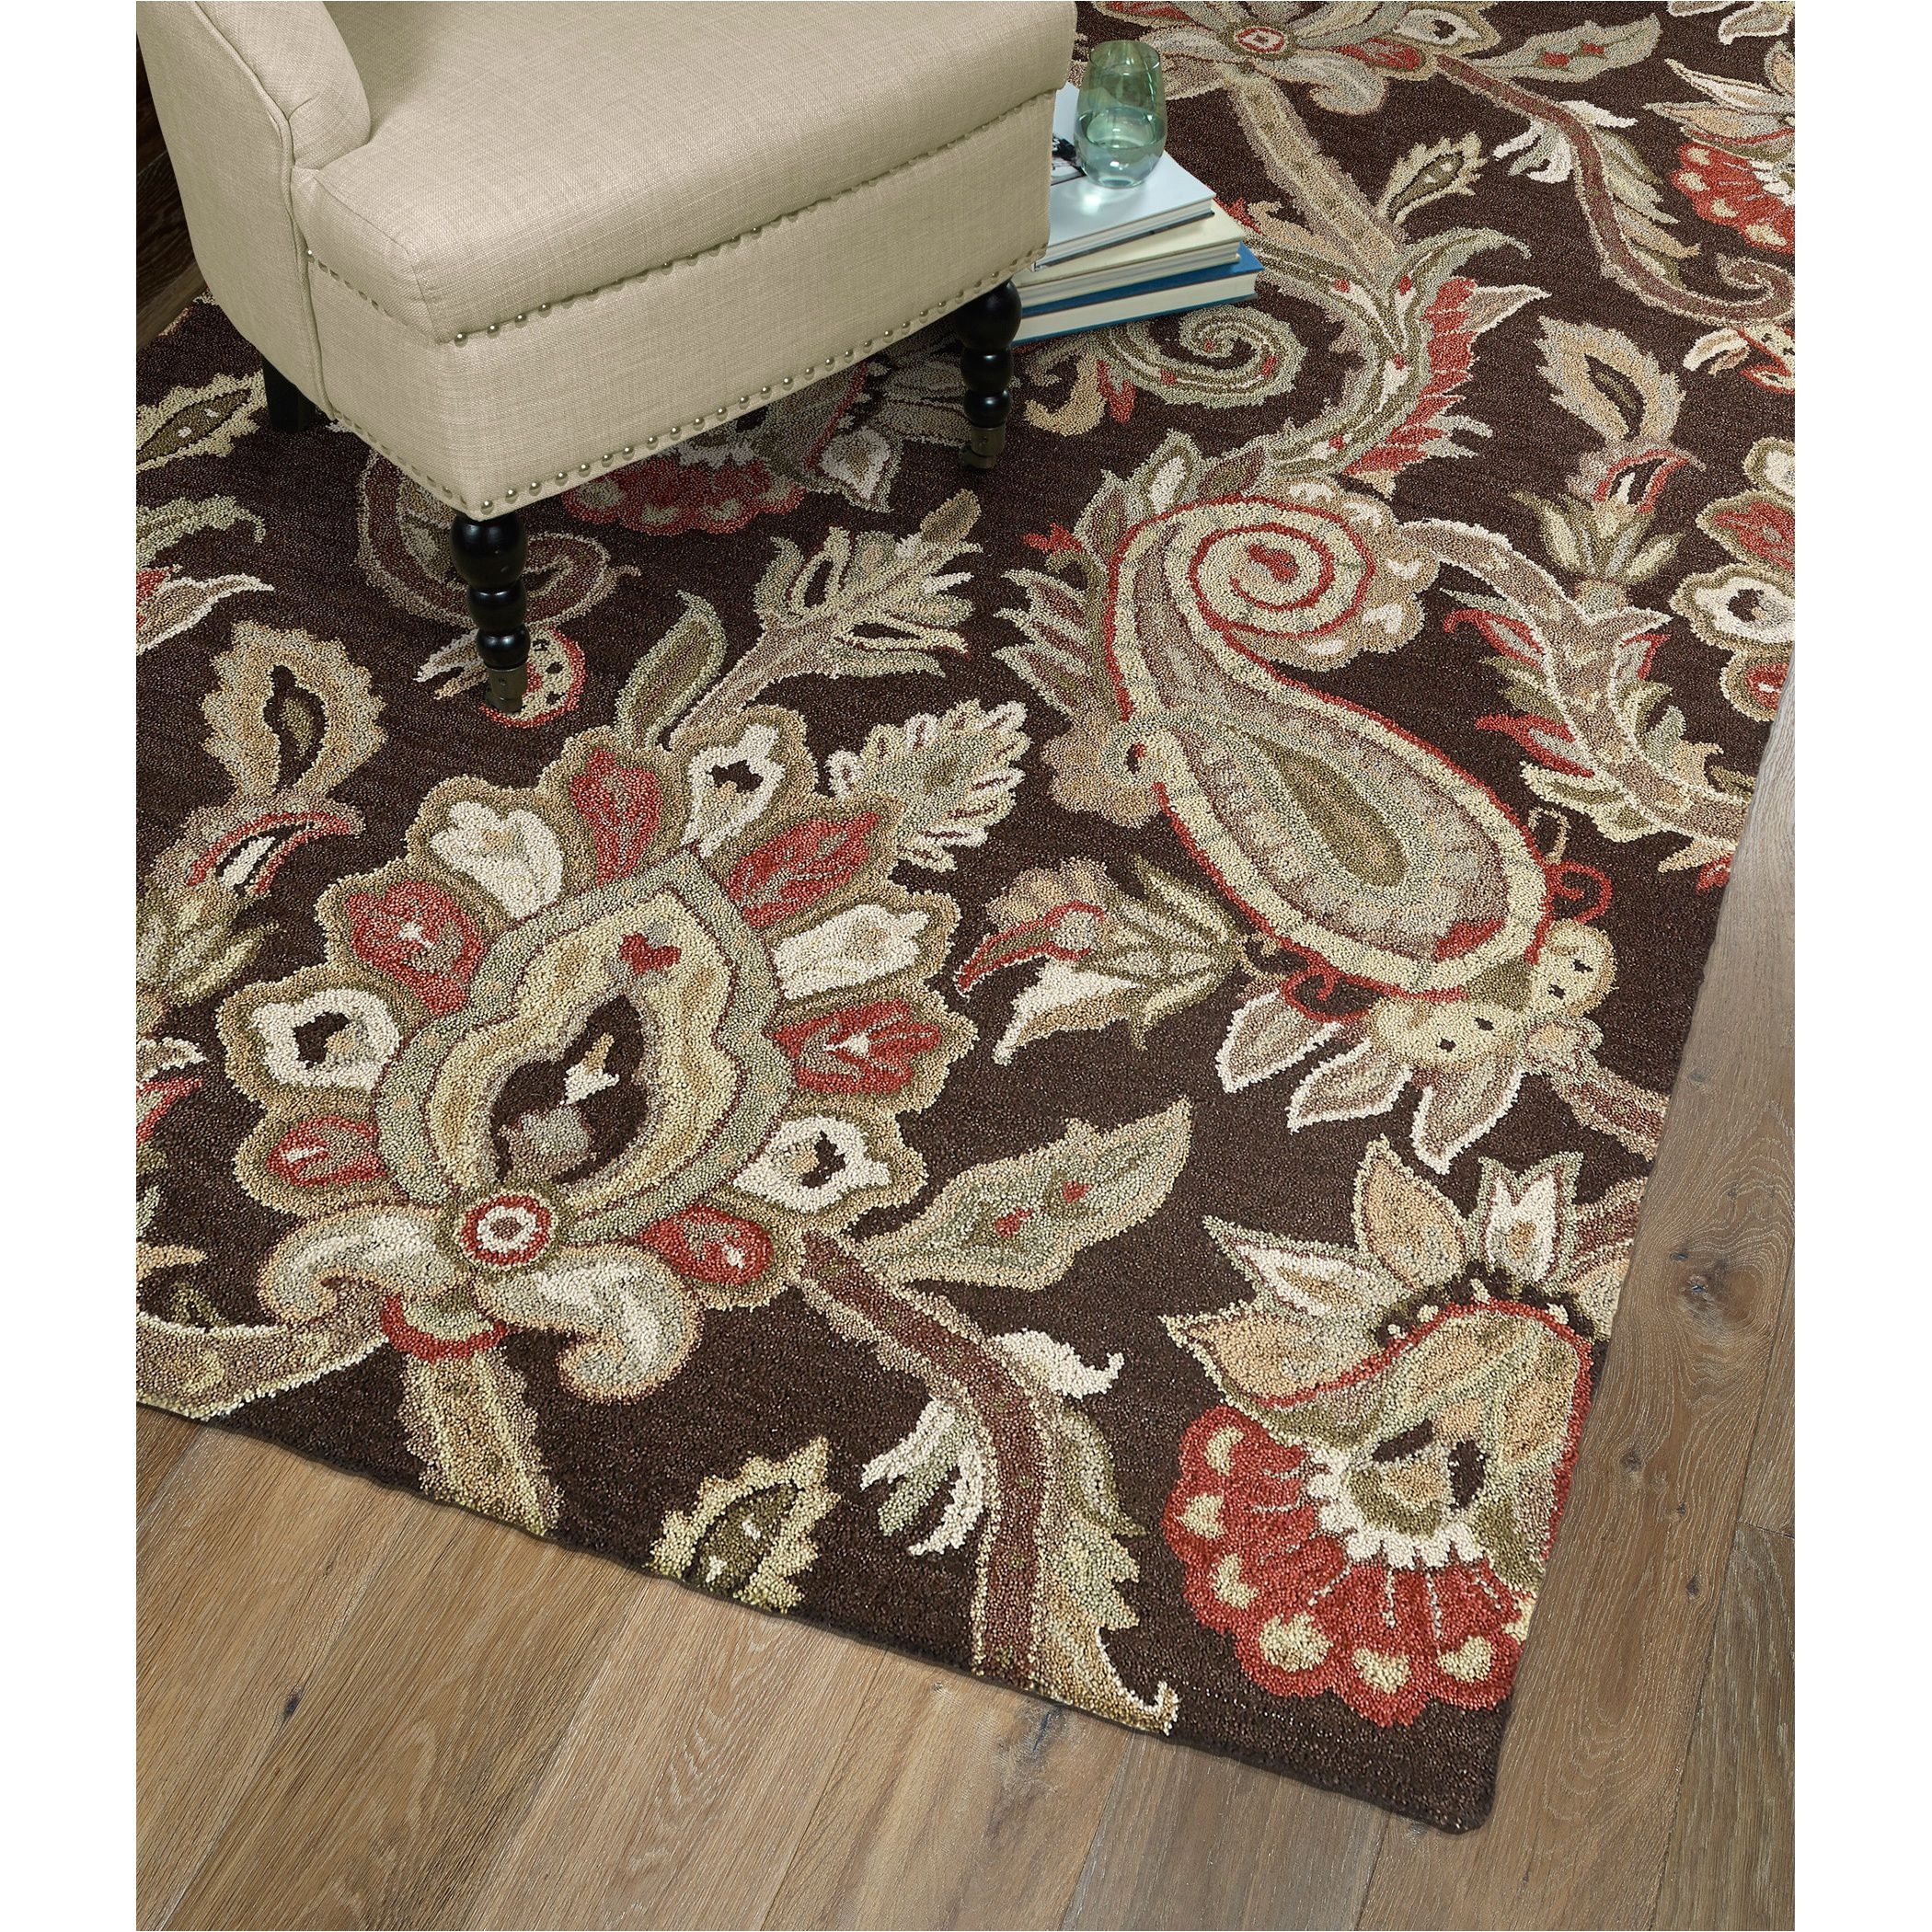 kaleen rugs christopher kashan hand tufted chocolate paisley rug 10 x 14 10 0 x 14 0 brown size 10 x 14 wool border